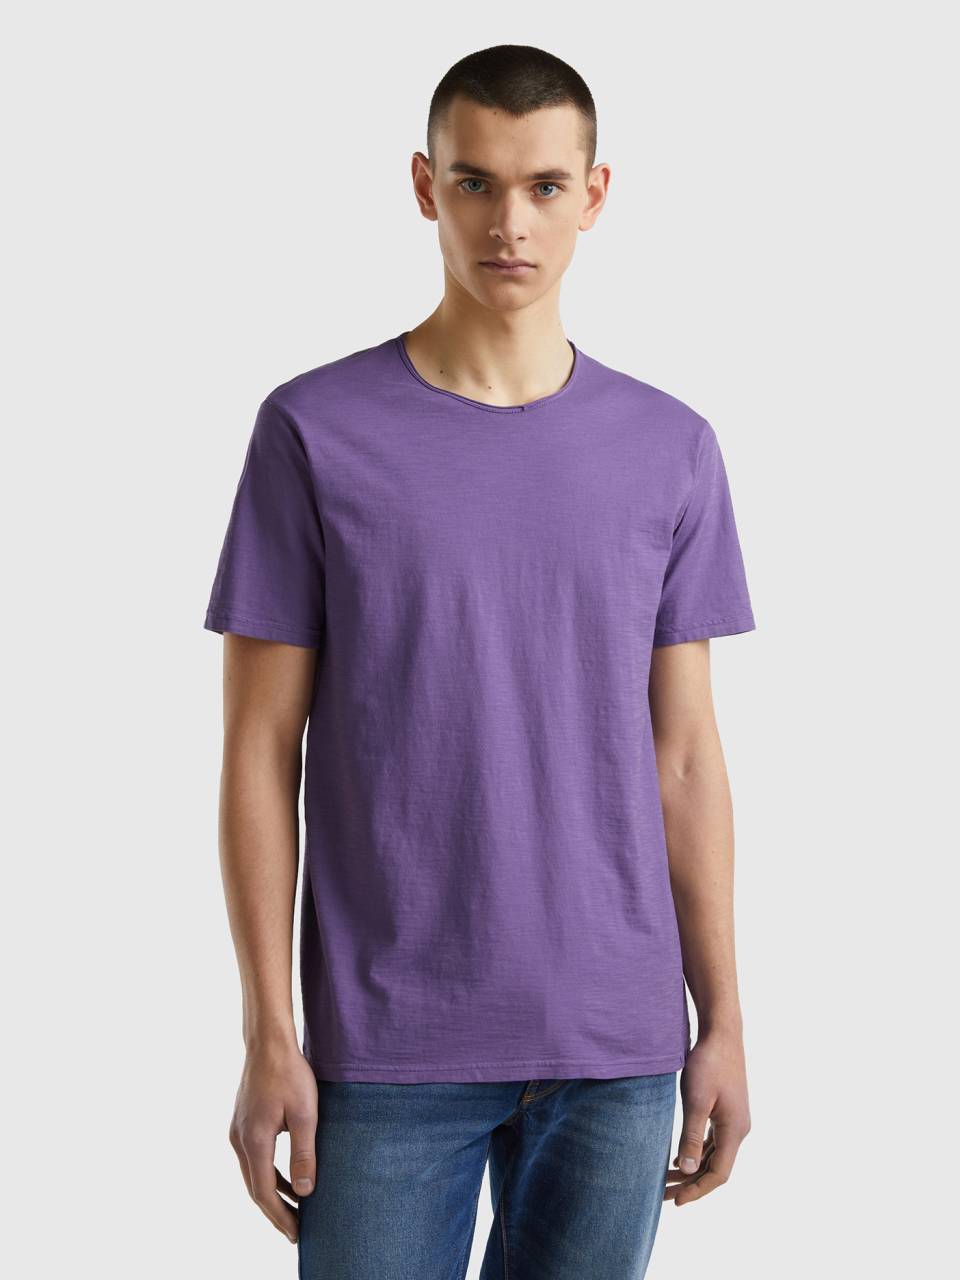 Purple t-shirt in slub cotton